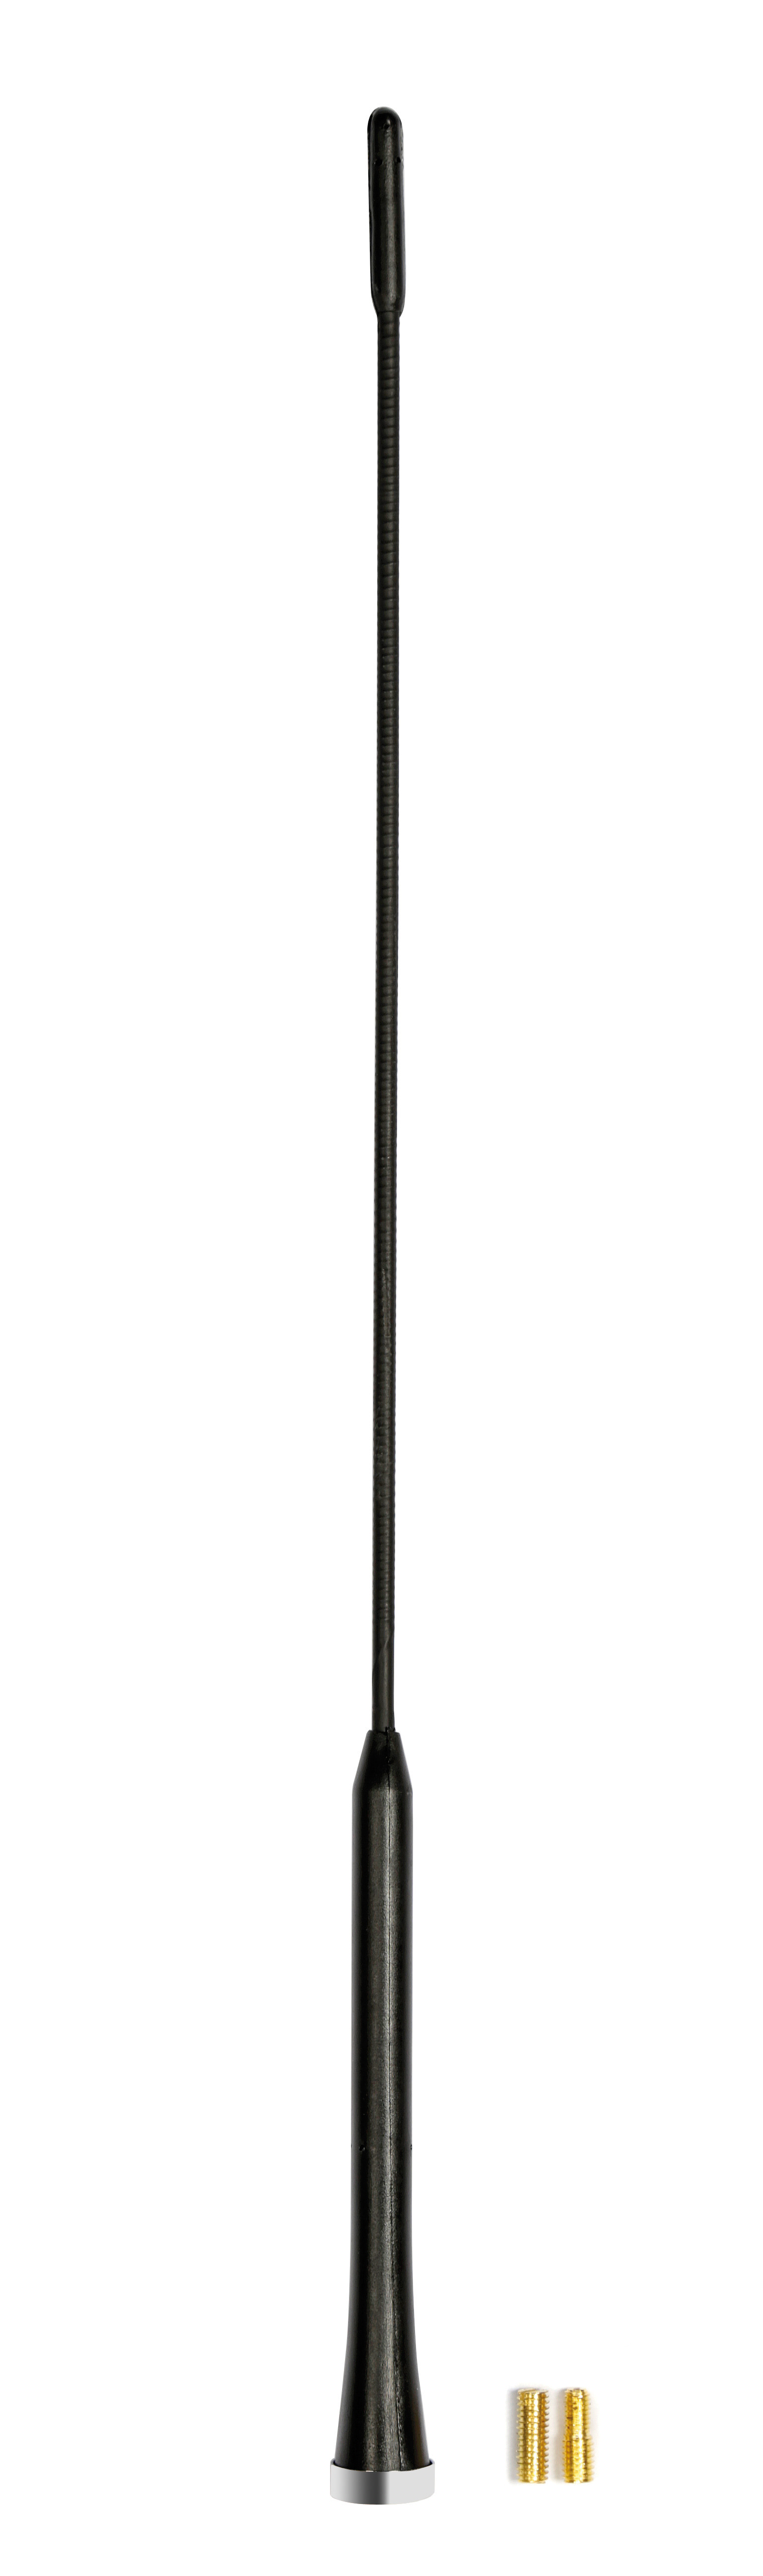 Vergea antena Chrome-Ring (AM/FM) Lampa - 41cm - Ø 5-6mm thumb